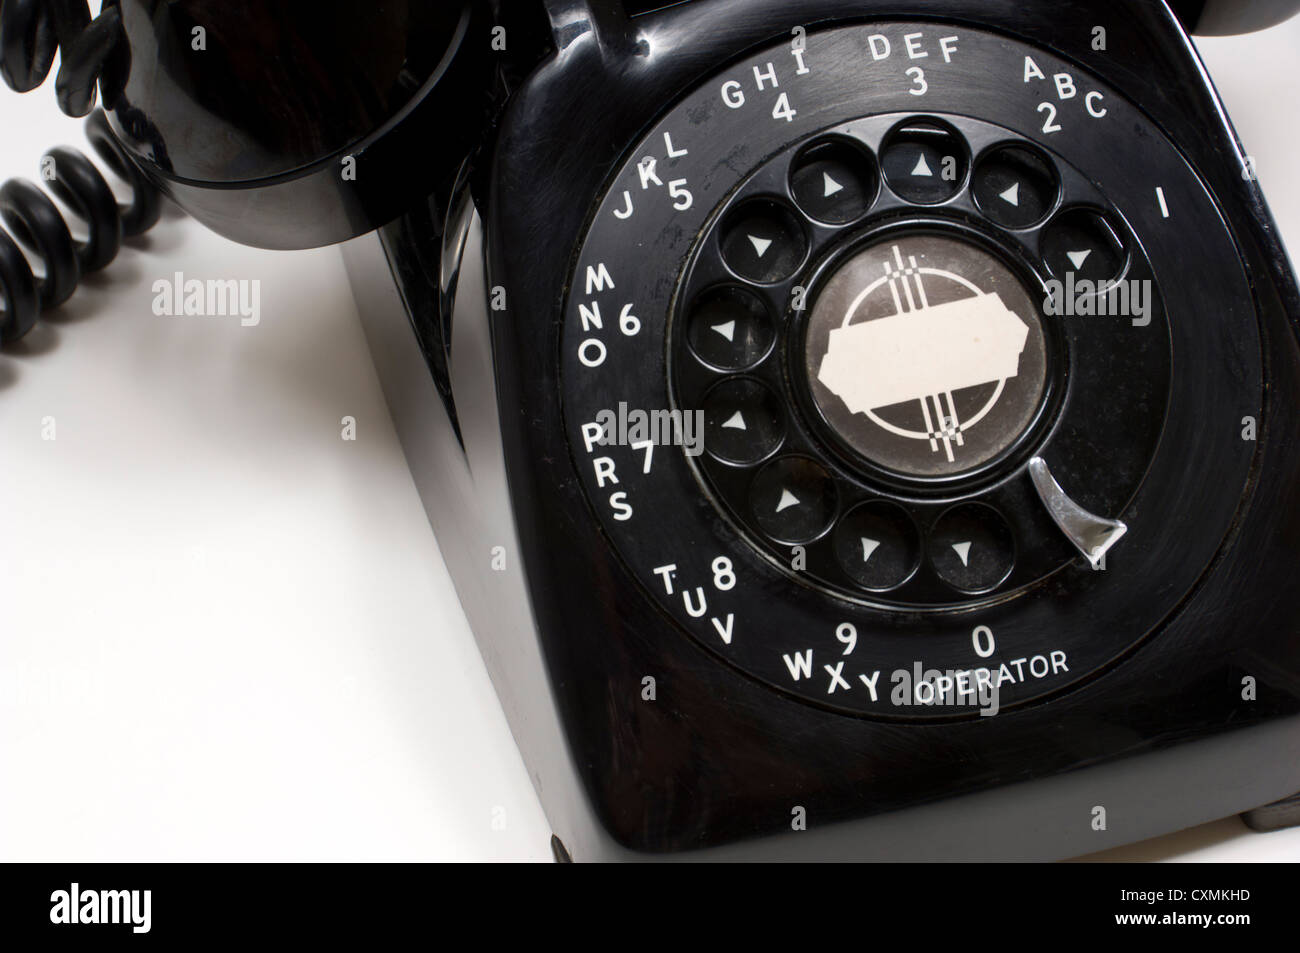 Vintage Black deskphone on white background Stock Photo